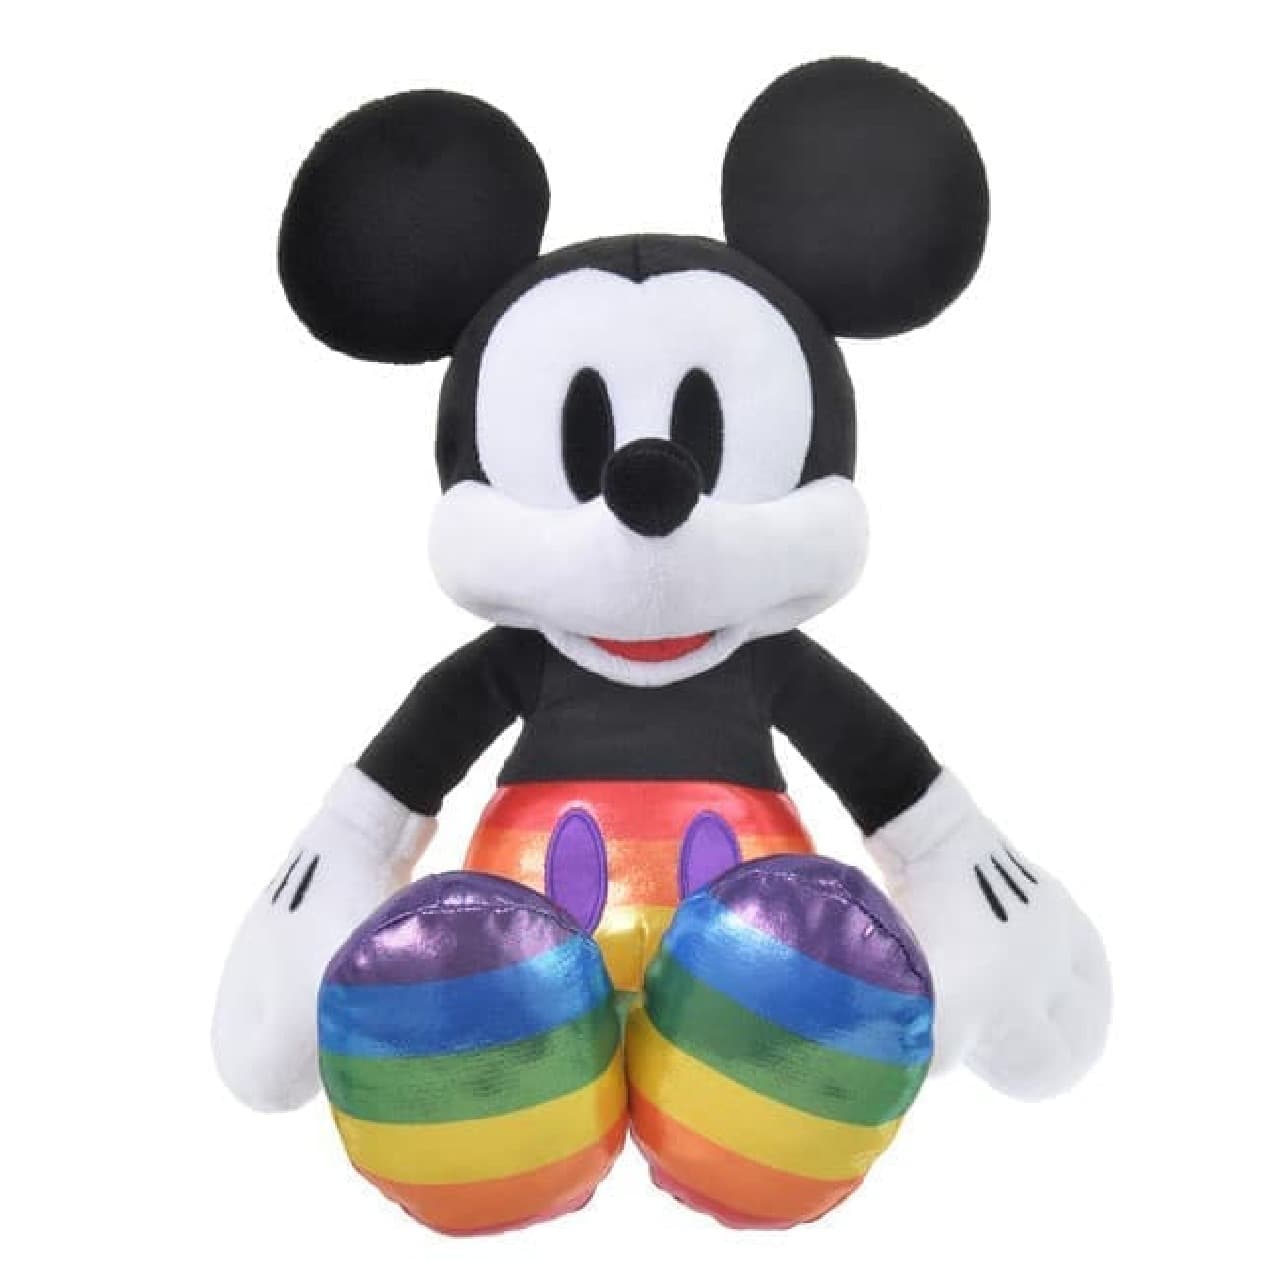 The Walt Disney Company's Pride Collection